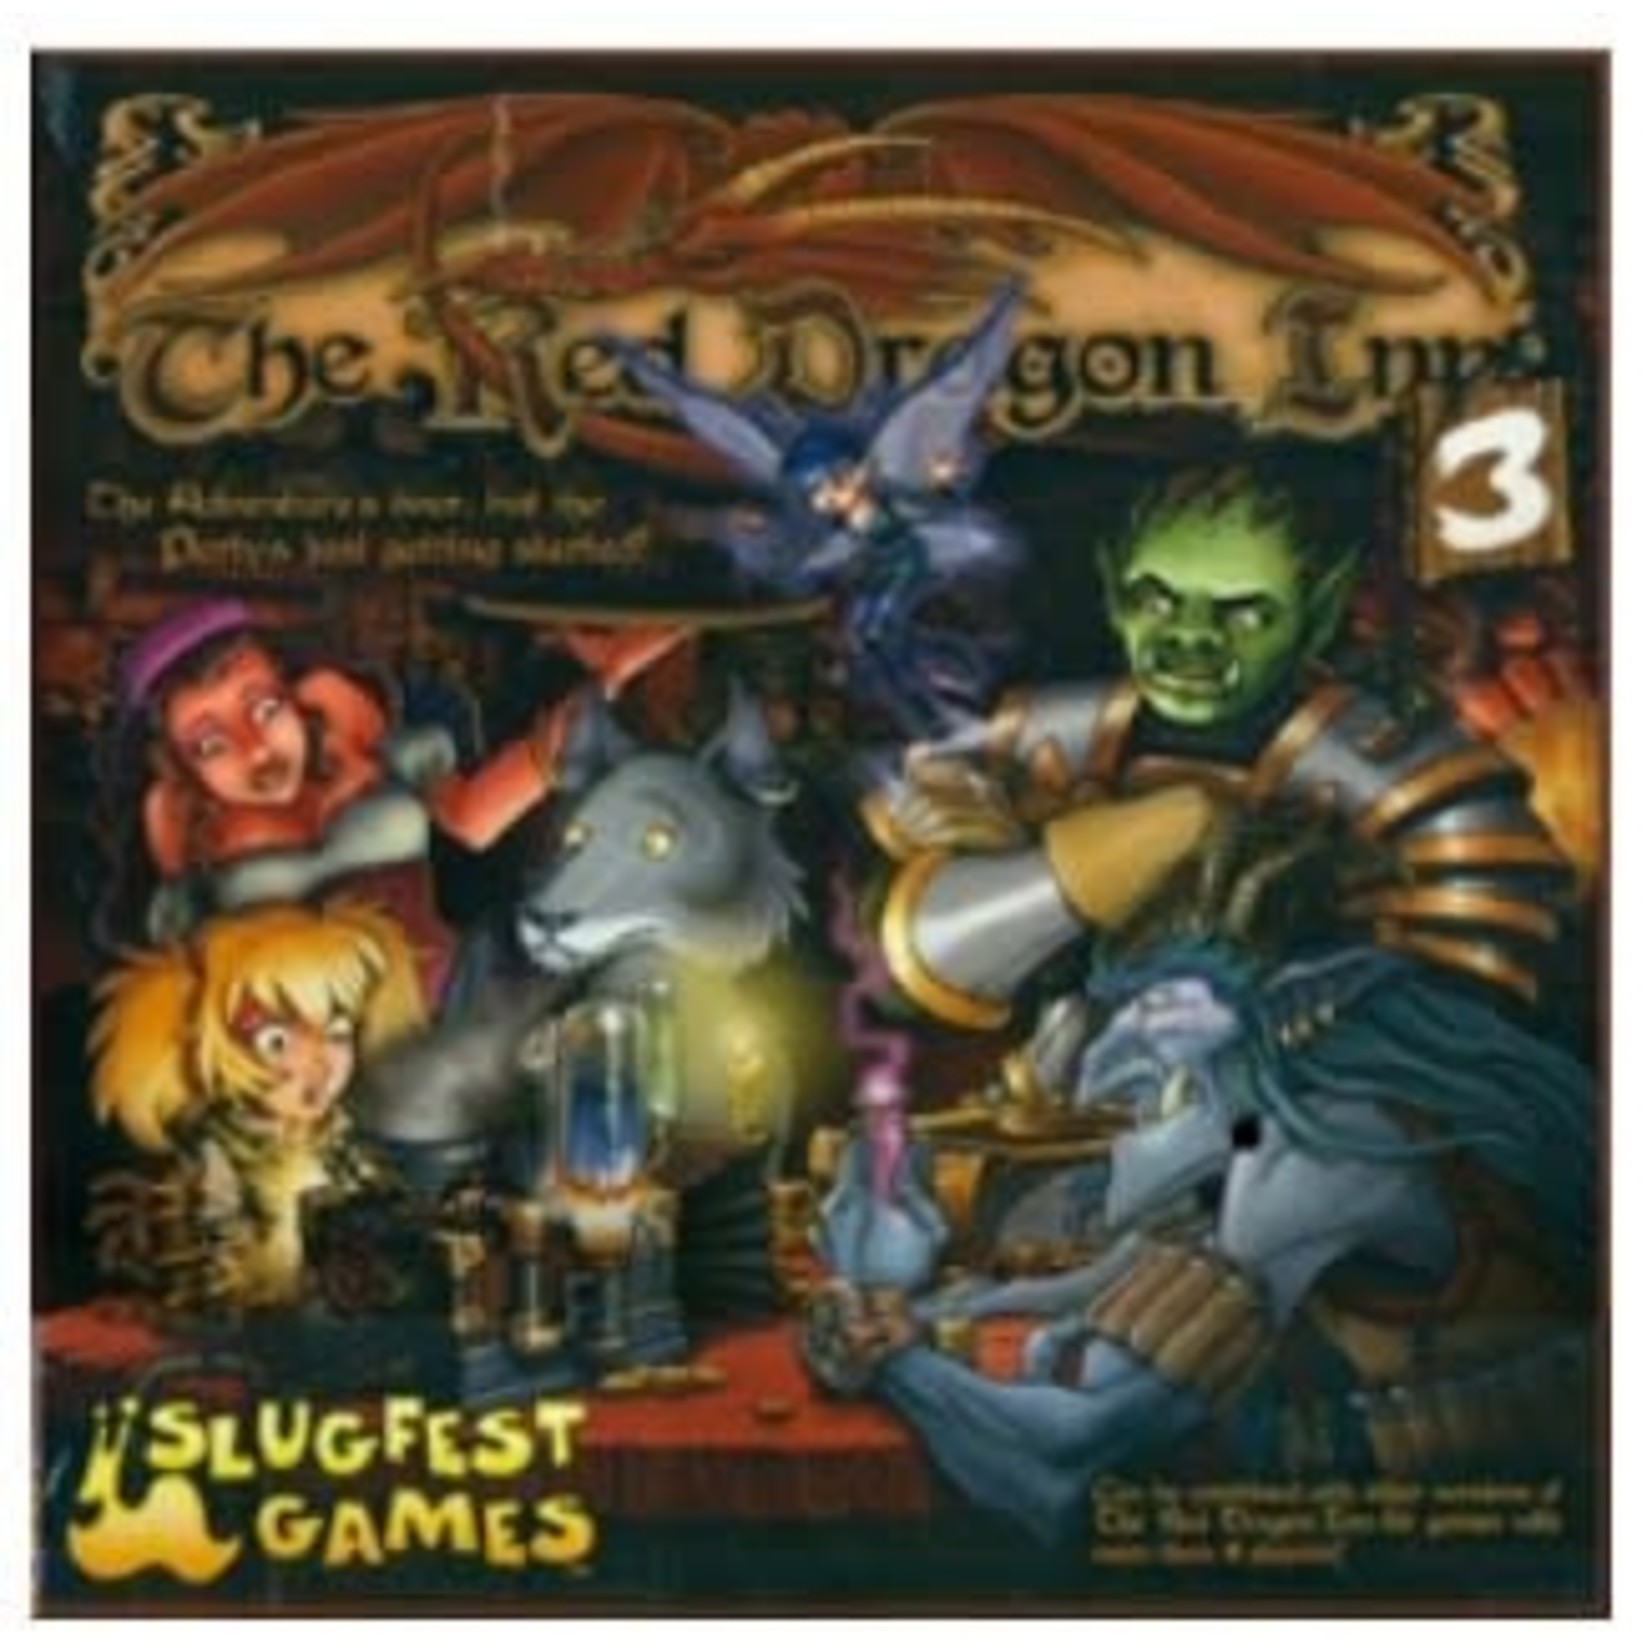 Slugfest Games The Red Dragon Inn 3